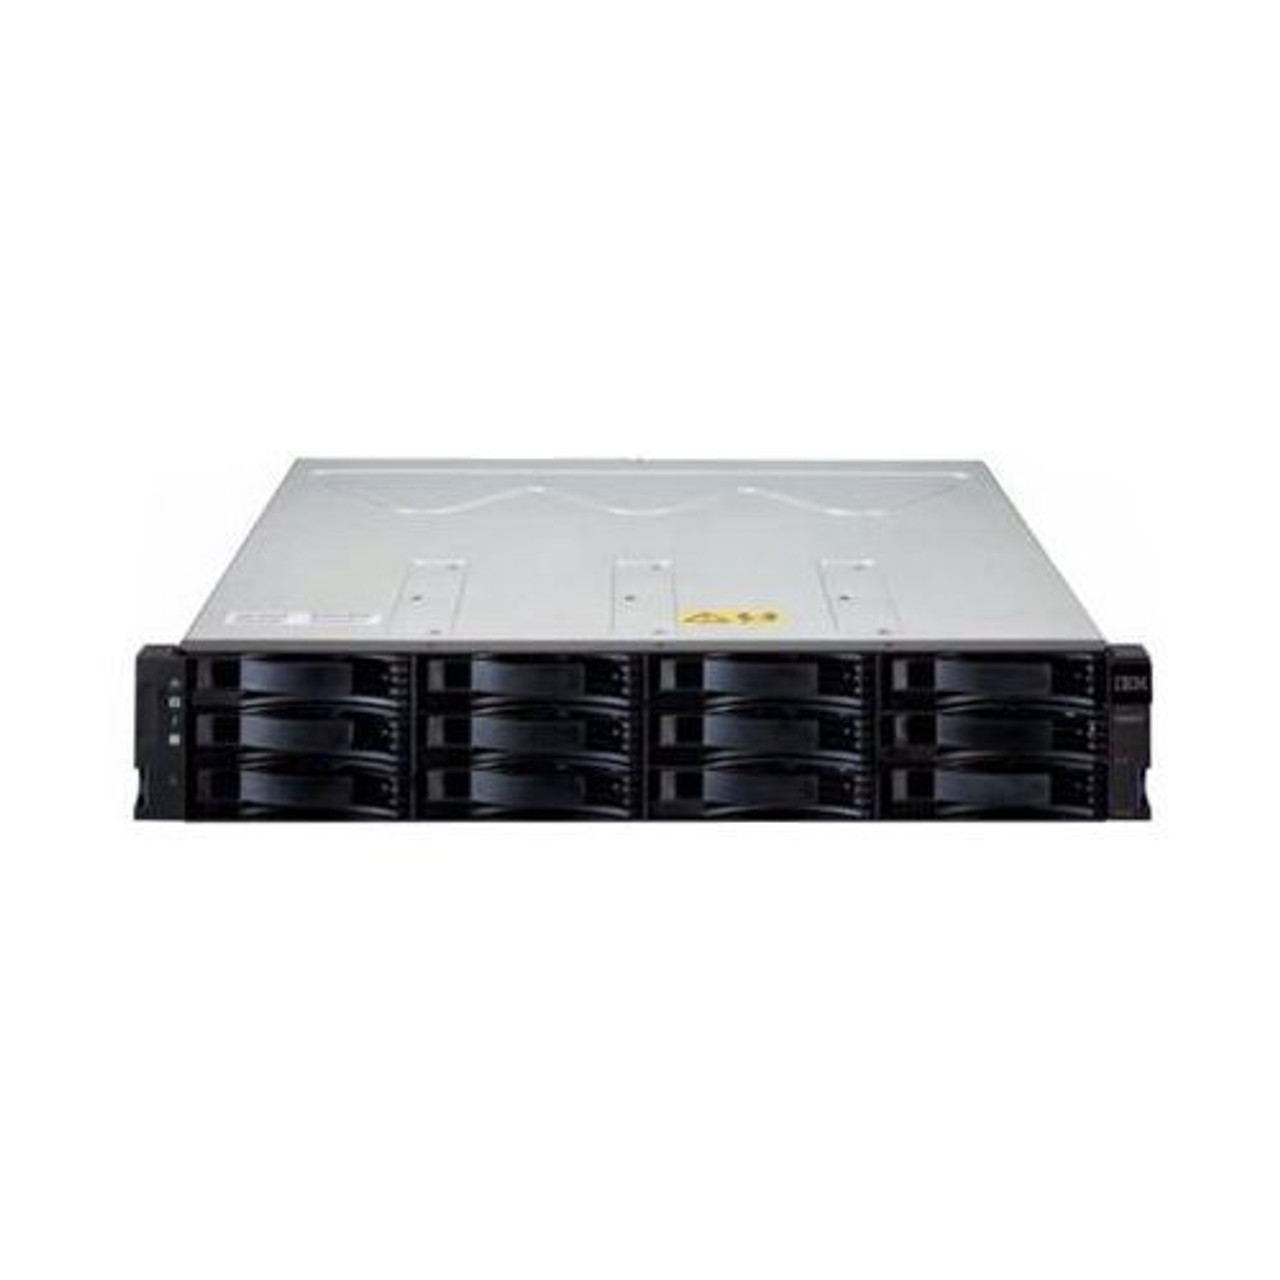 IBM DS3512 Storage Server